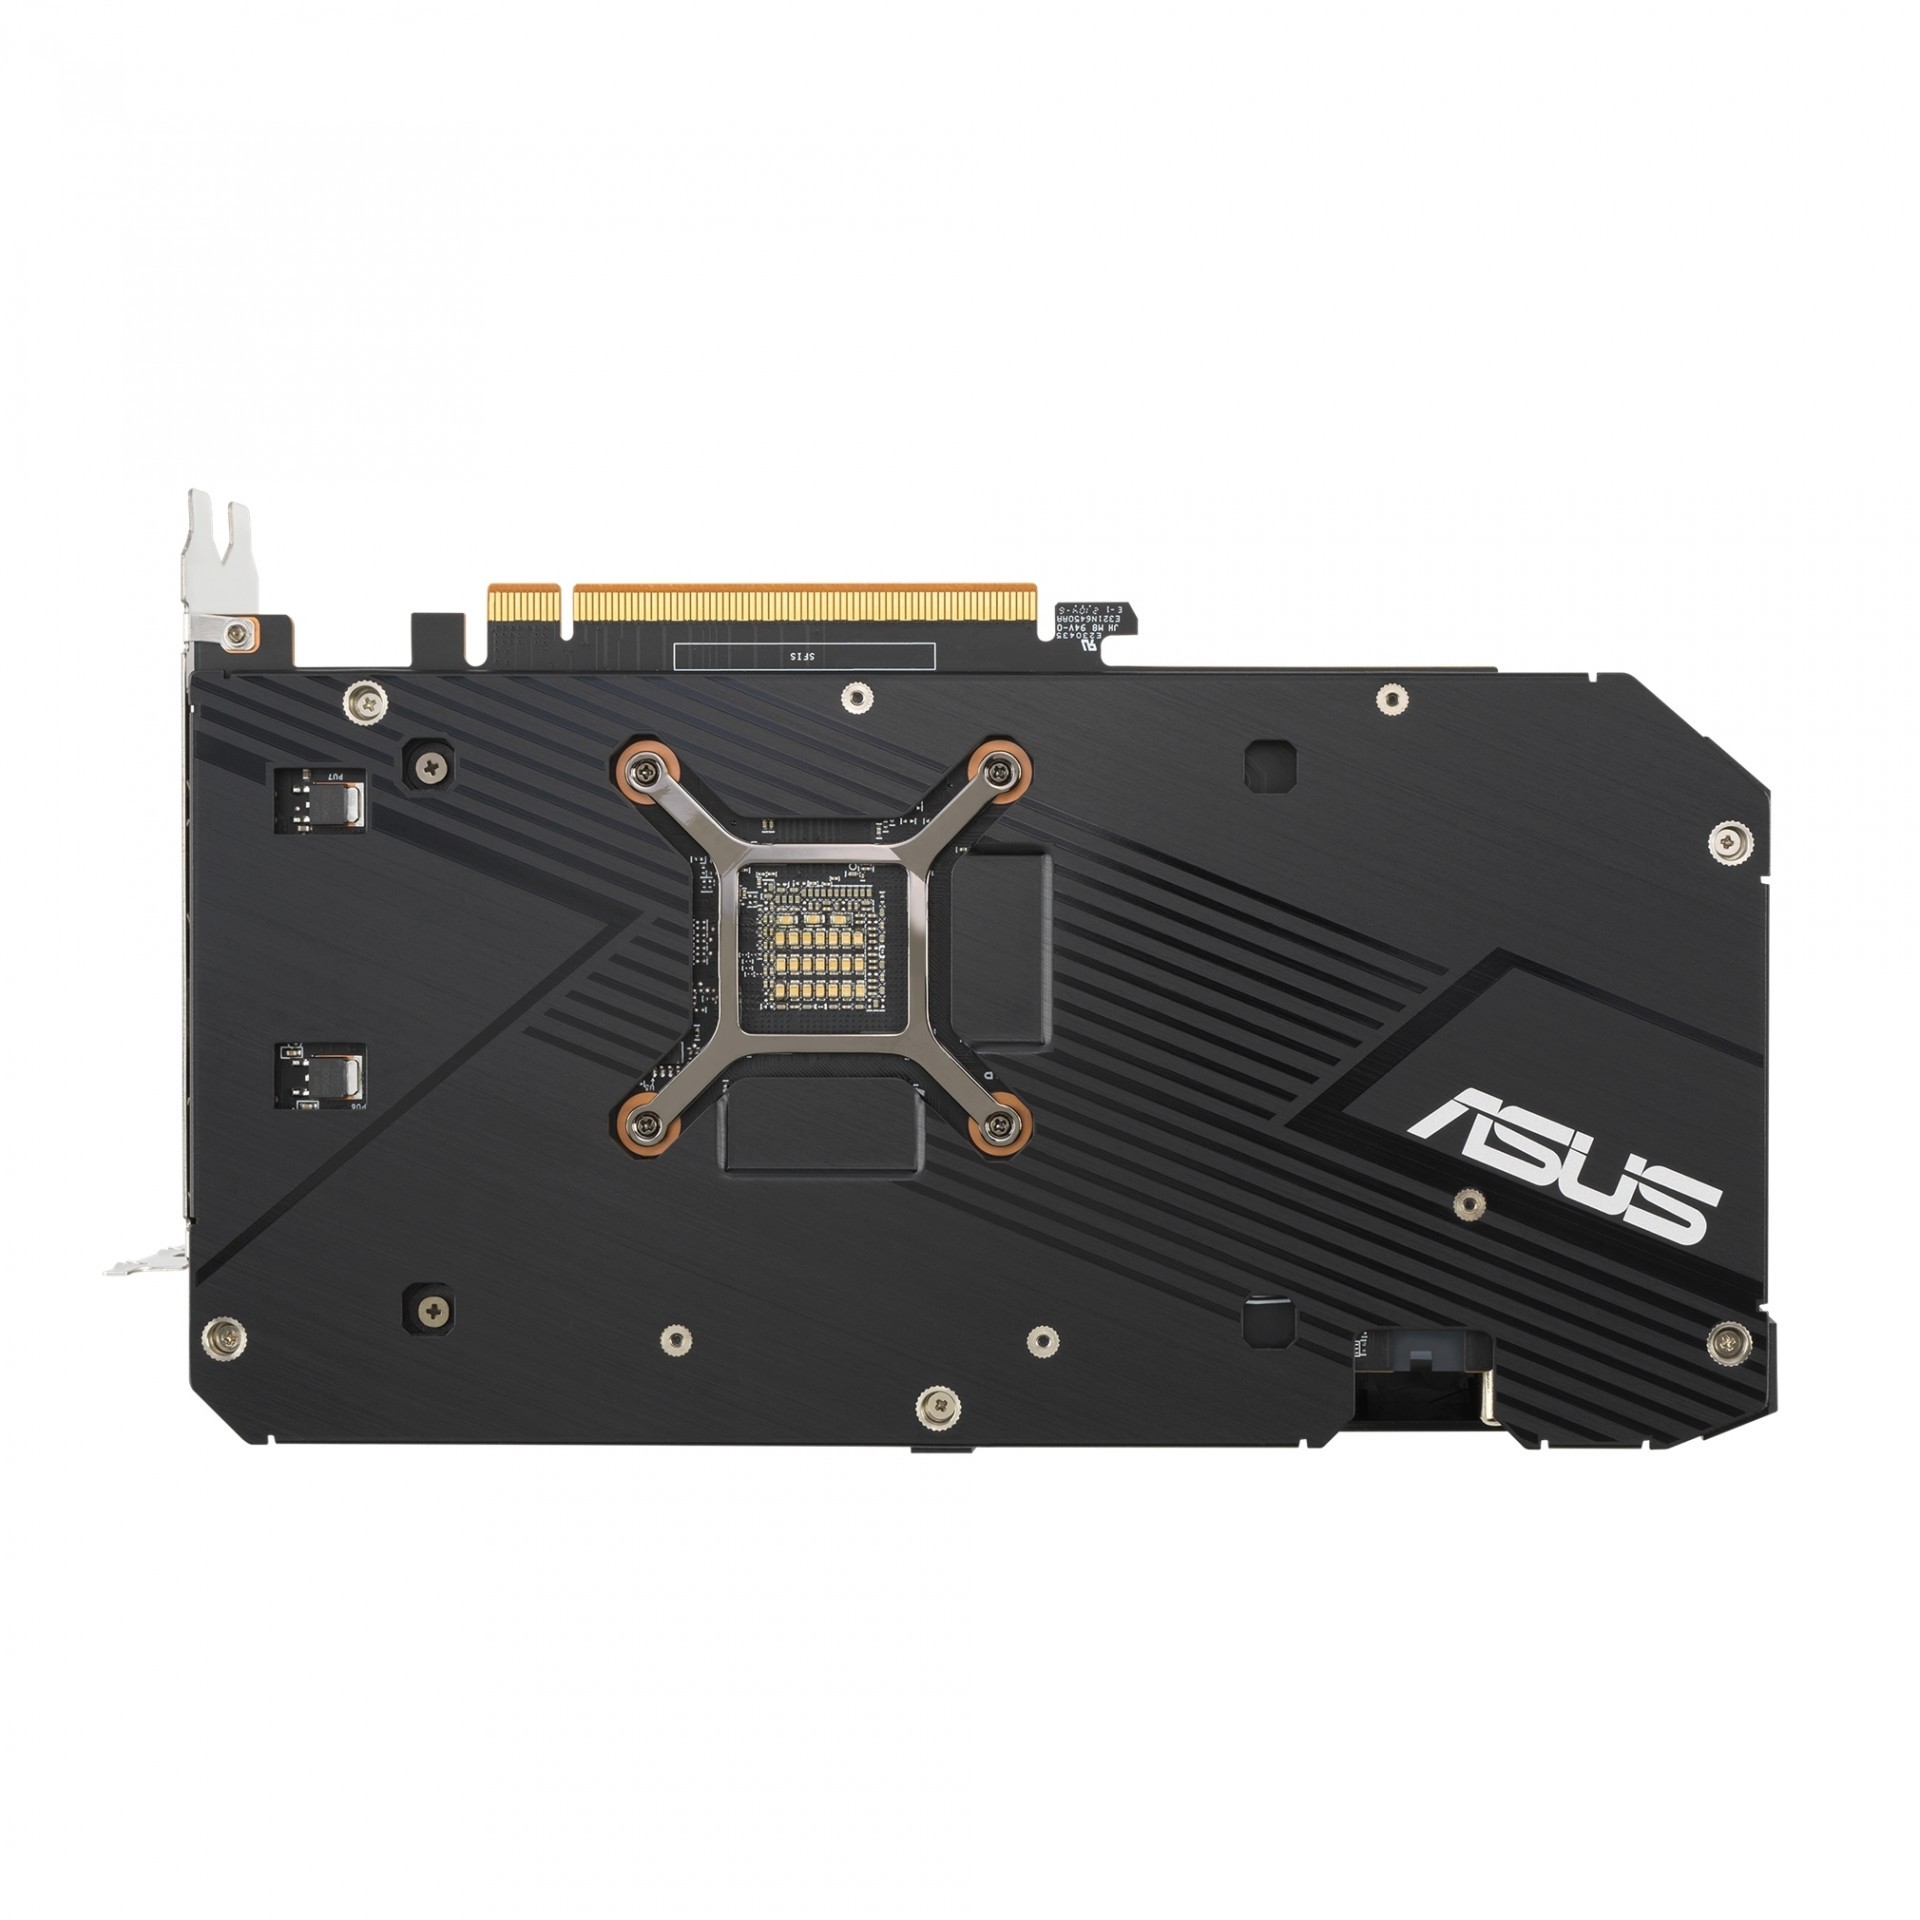 華碩 ASUS Dual Radeon RX 6600 上市 運用 AMD RDNA 2 顯示架構